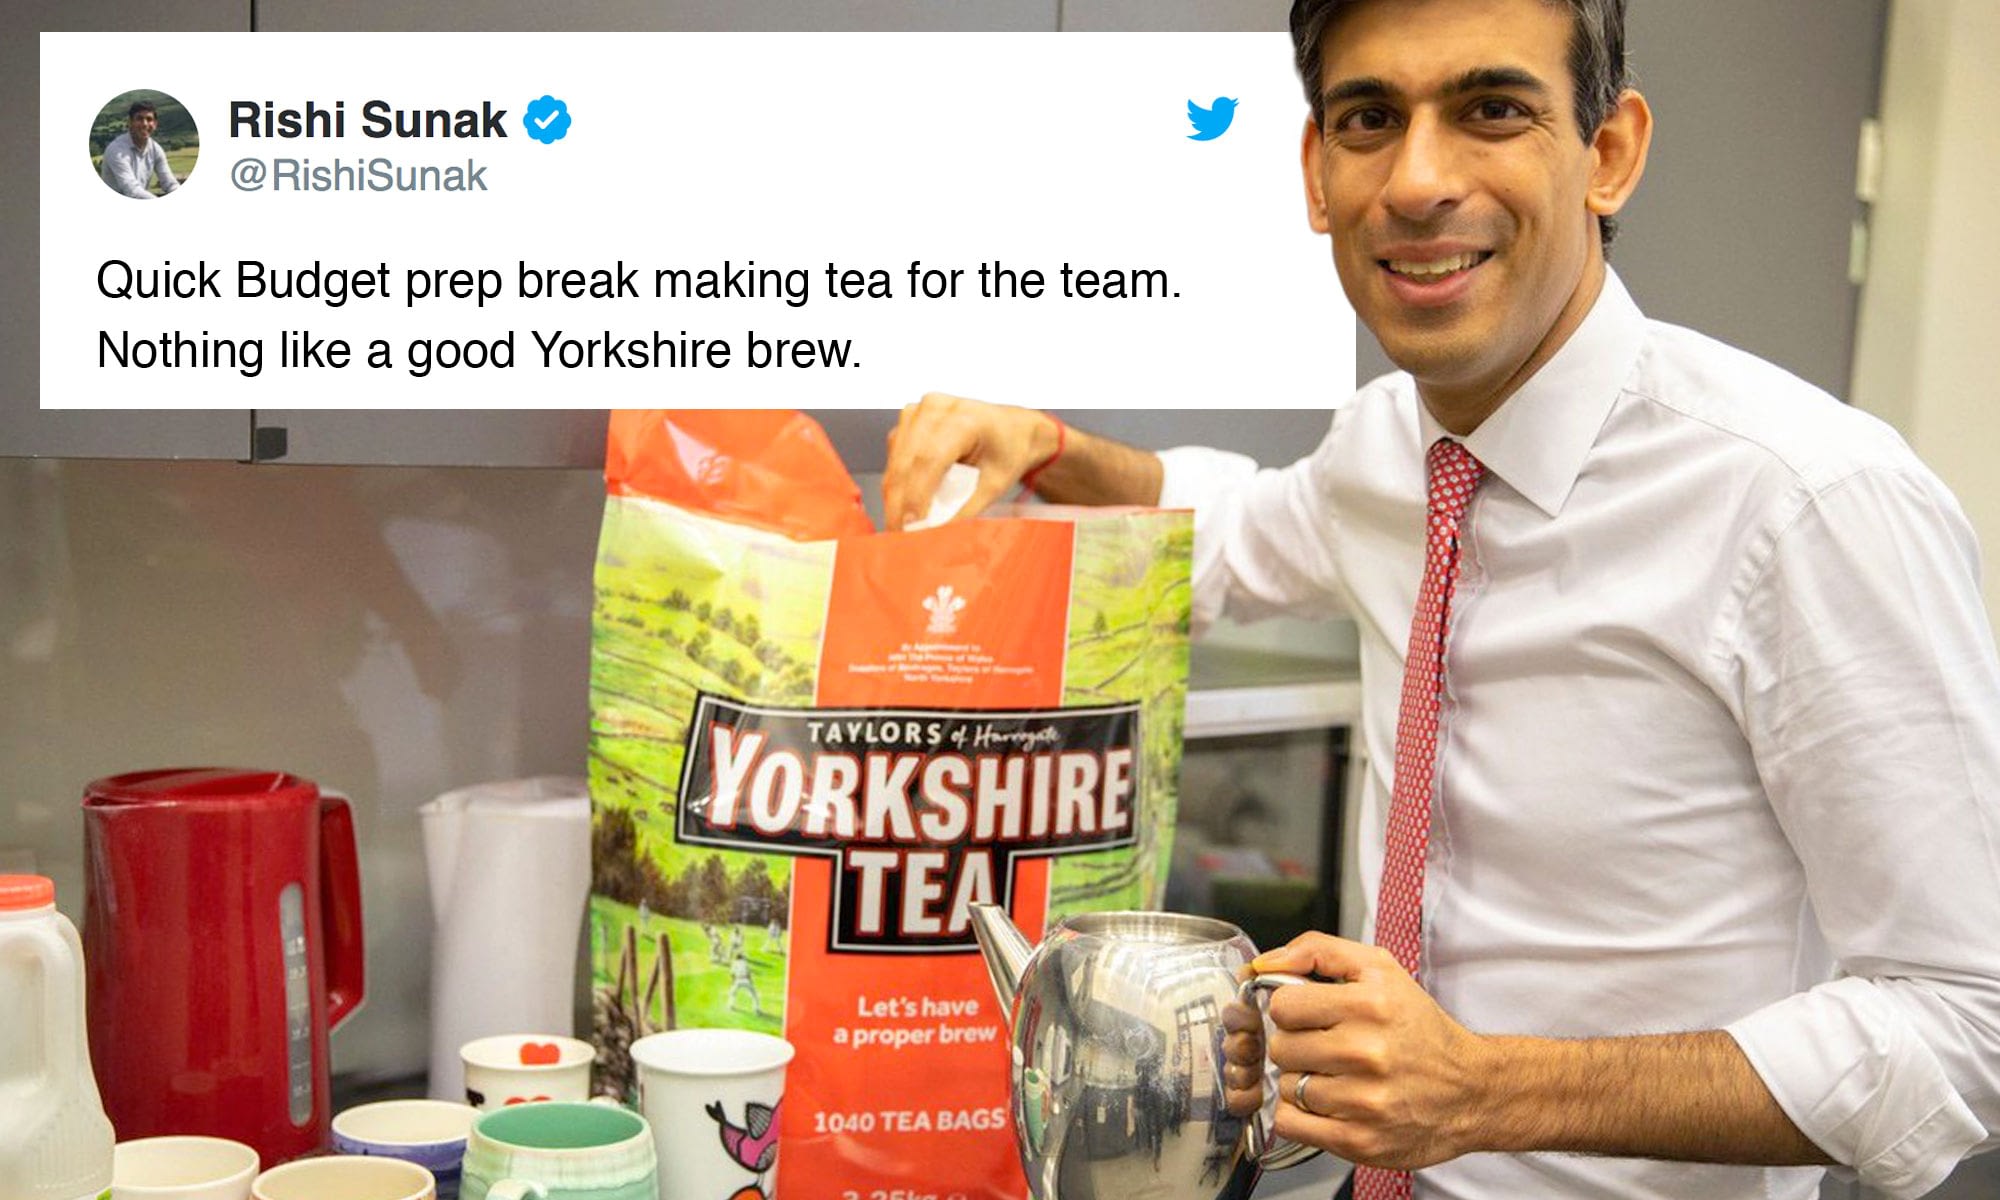 Rishi Sunak "Quick Budget prep break making tea for the team. Nothing like a good Yorkshire brew."